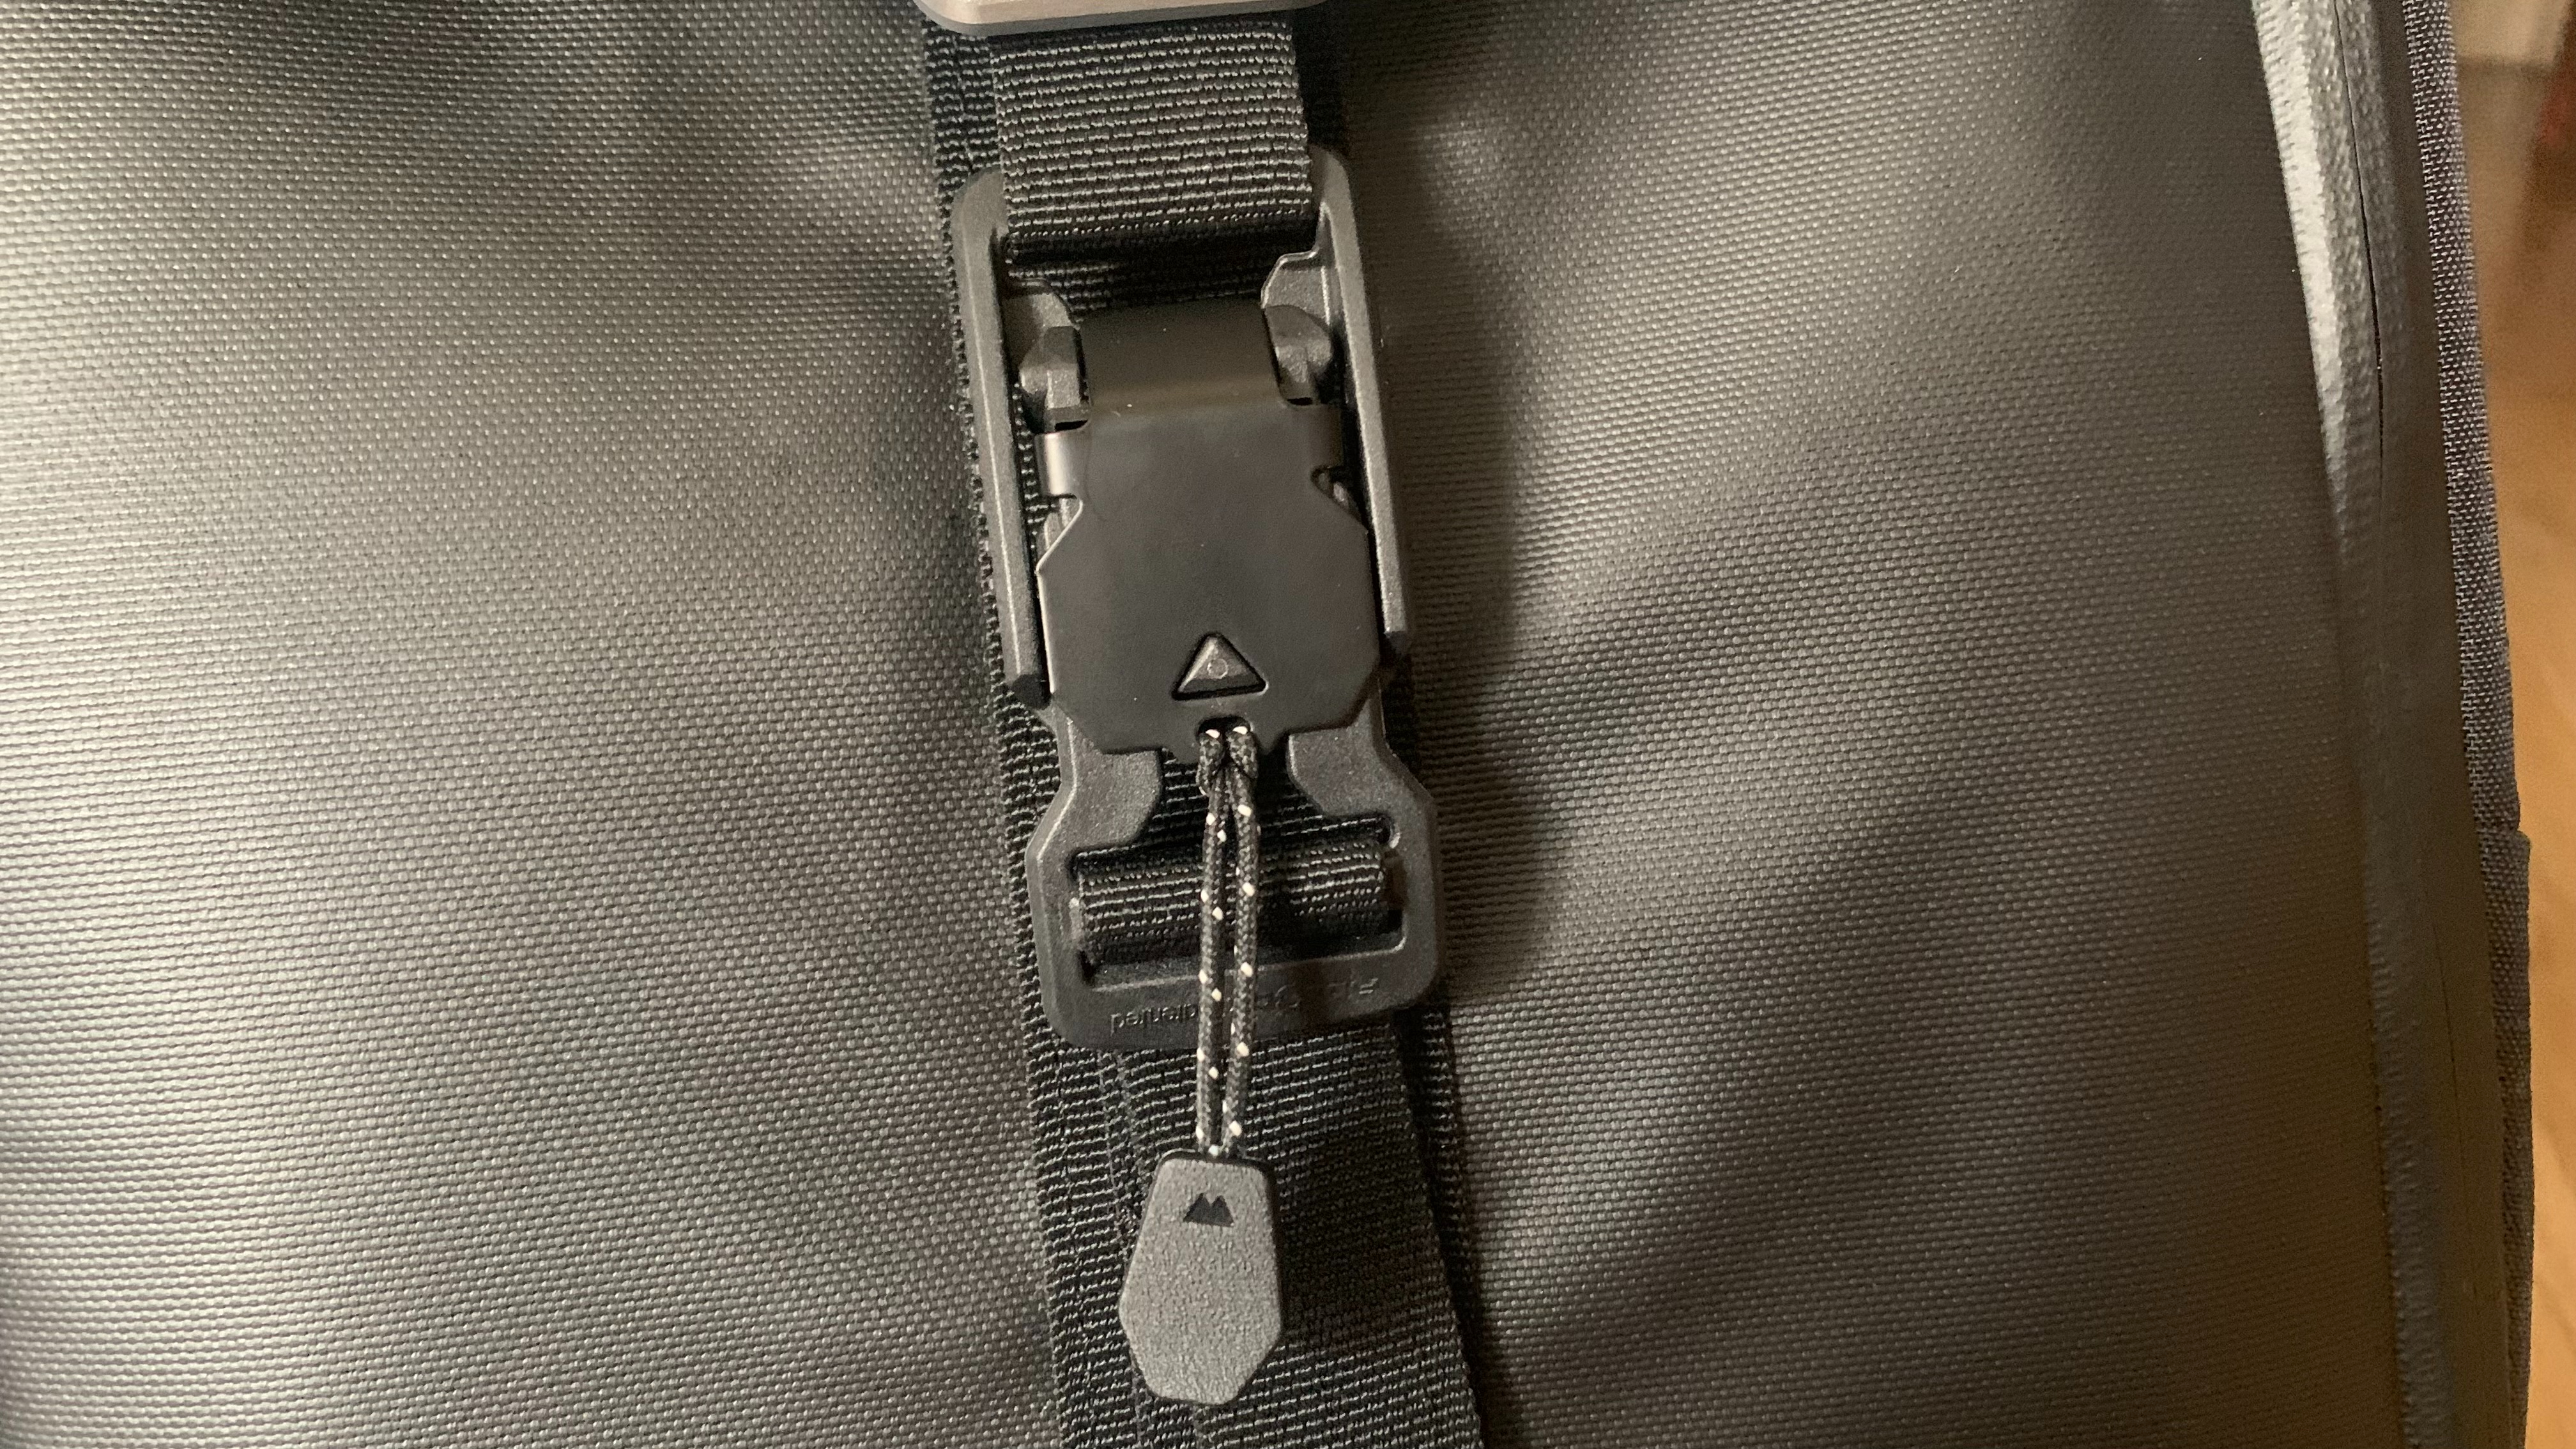 Mous 25L backpack Fidlock lock